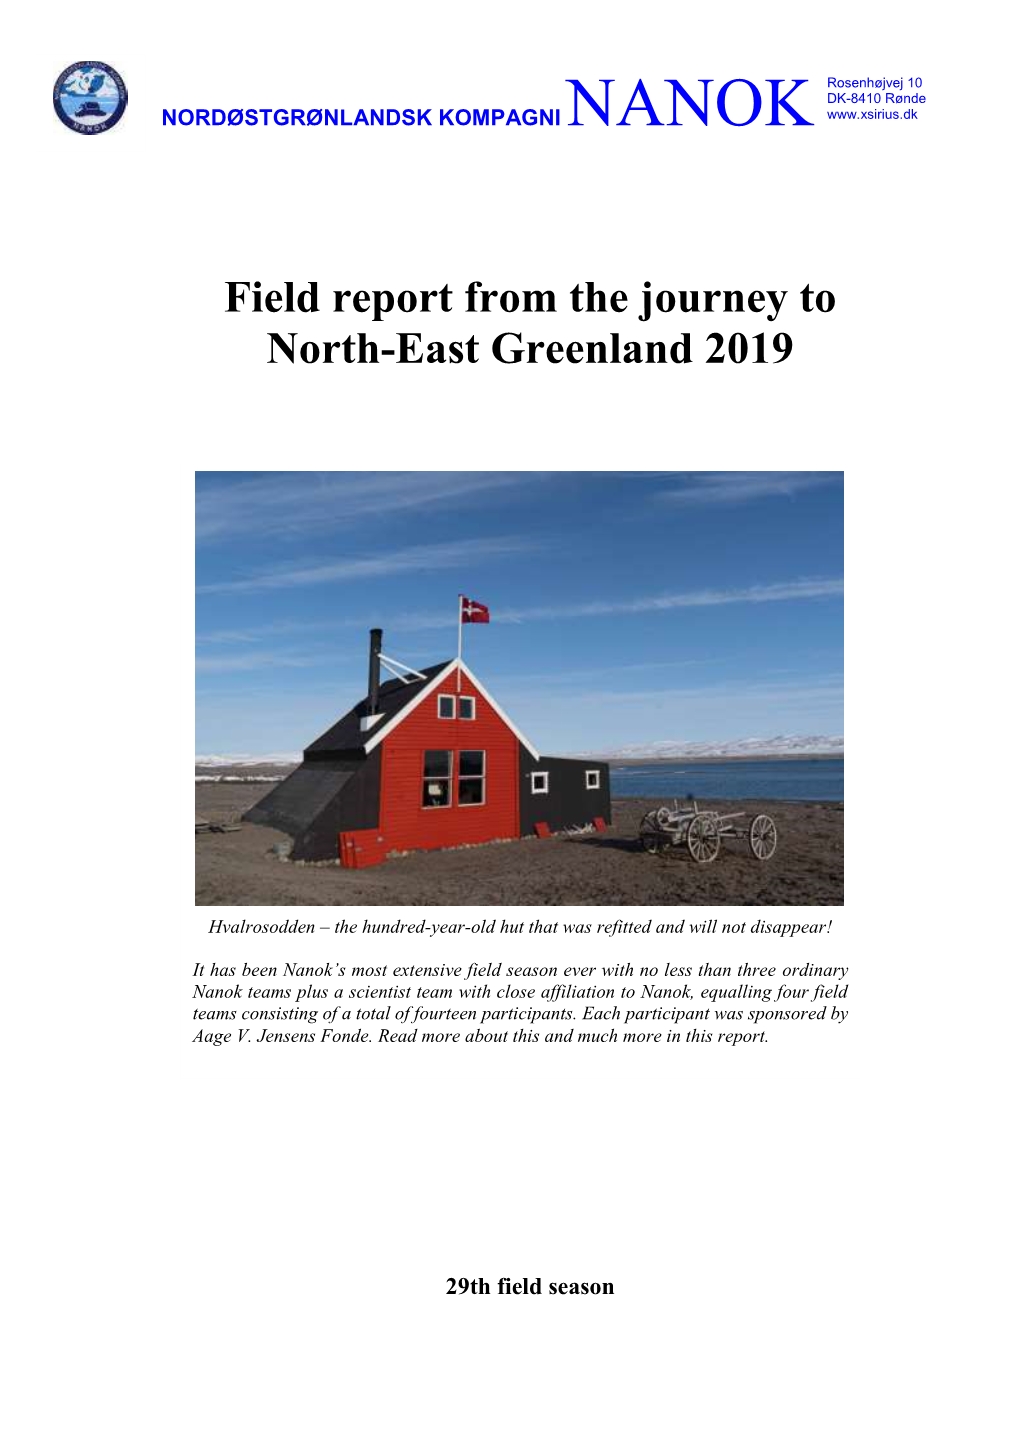 Field Report 2019